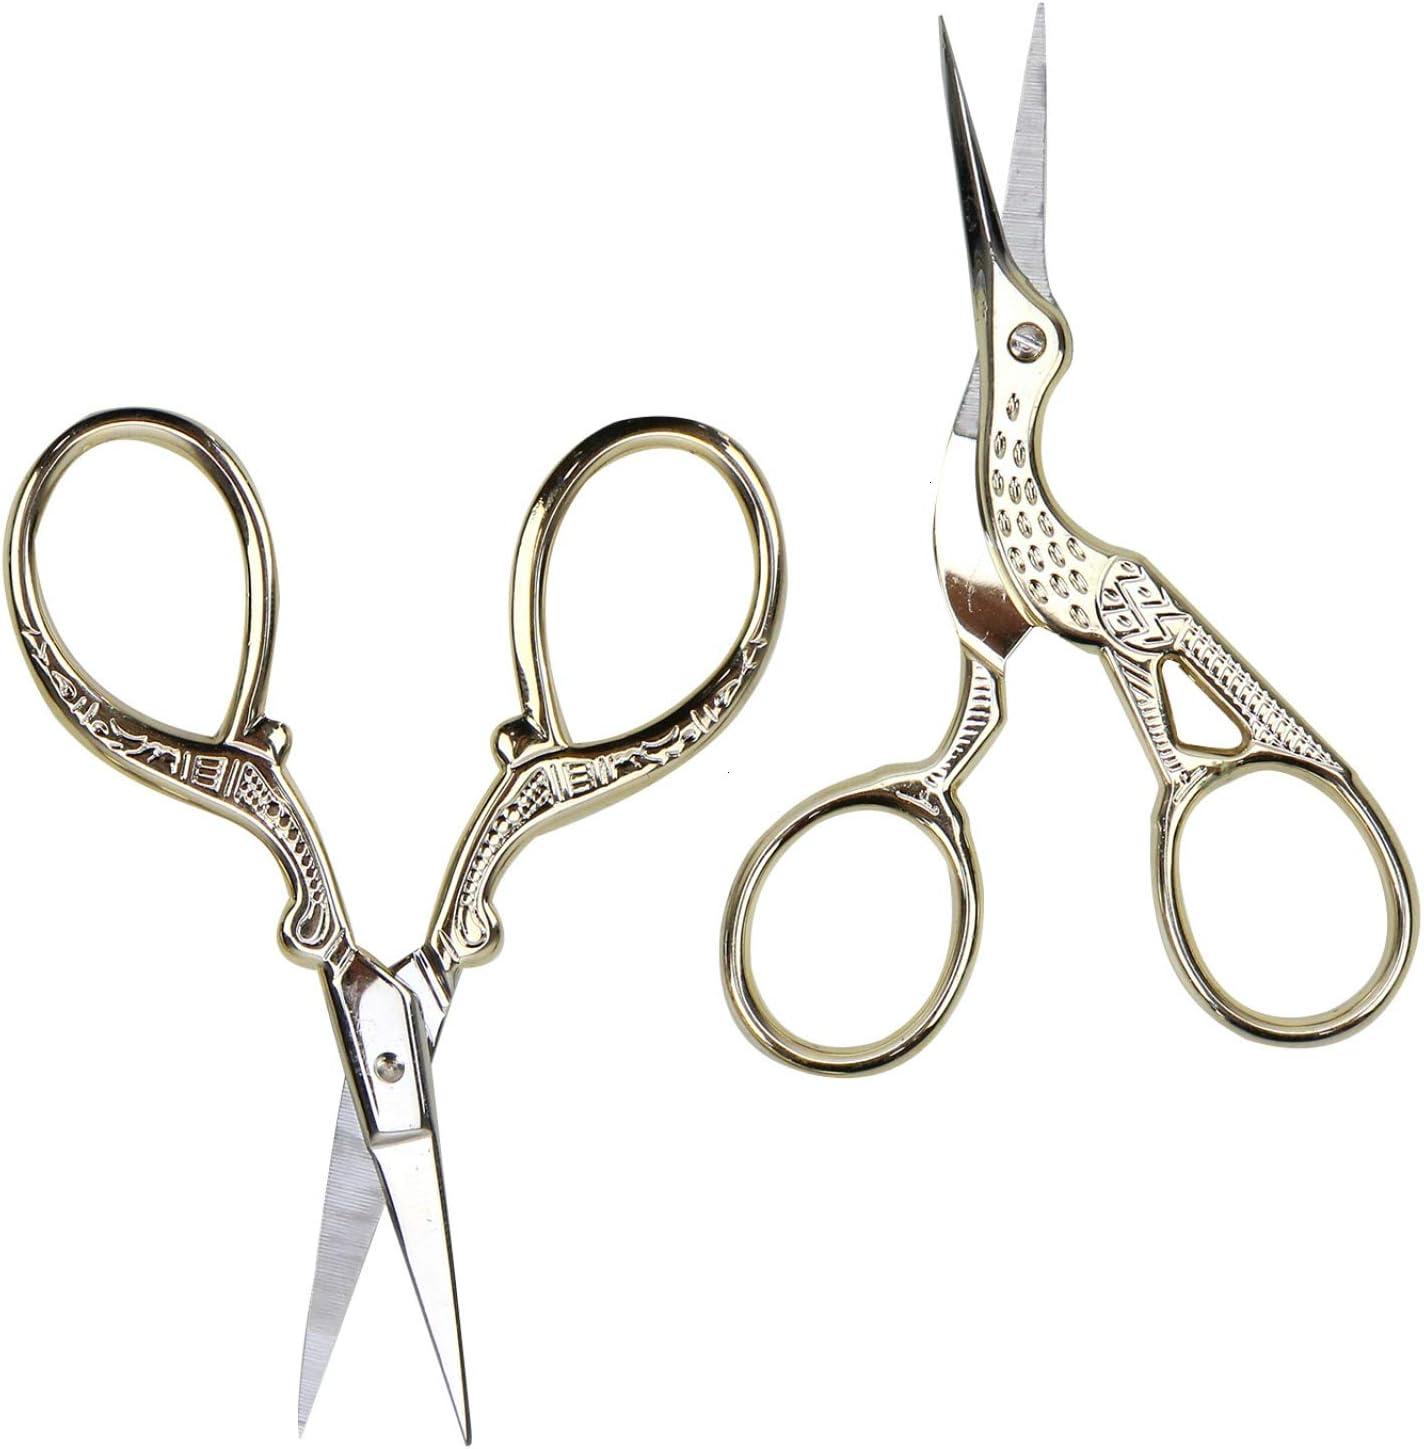 AQUEENLY Embroidery Scissors, Stainless Steel Sharp Stork Scissors